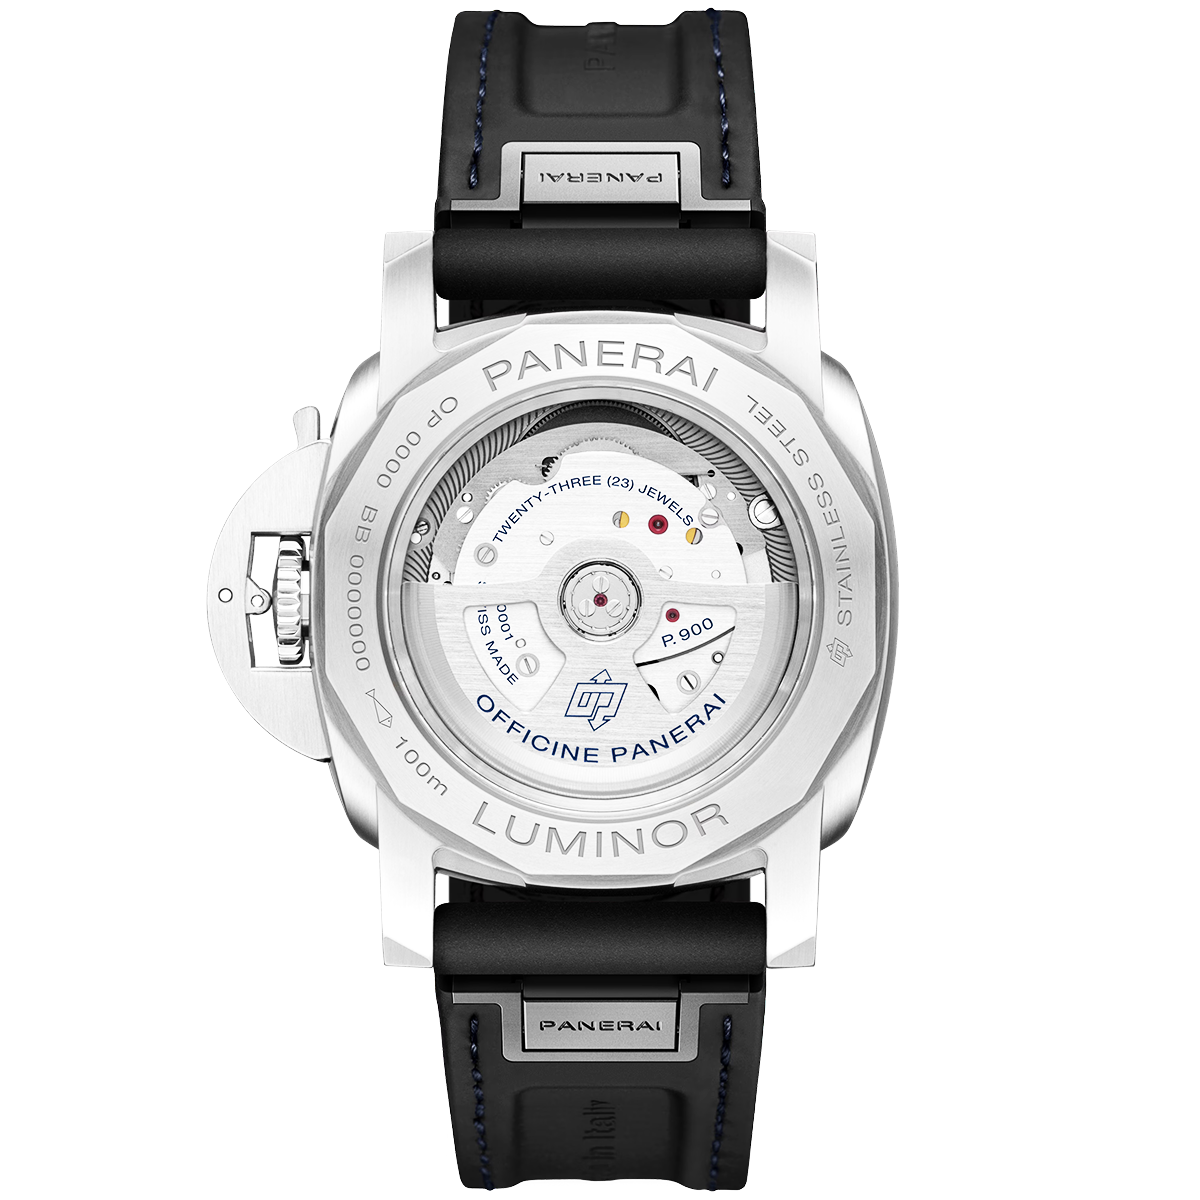 Luminor Quaranta BiTempo 40mm Luna Rossa Edition Watch